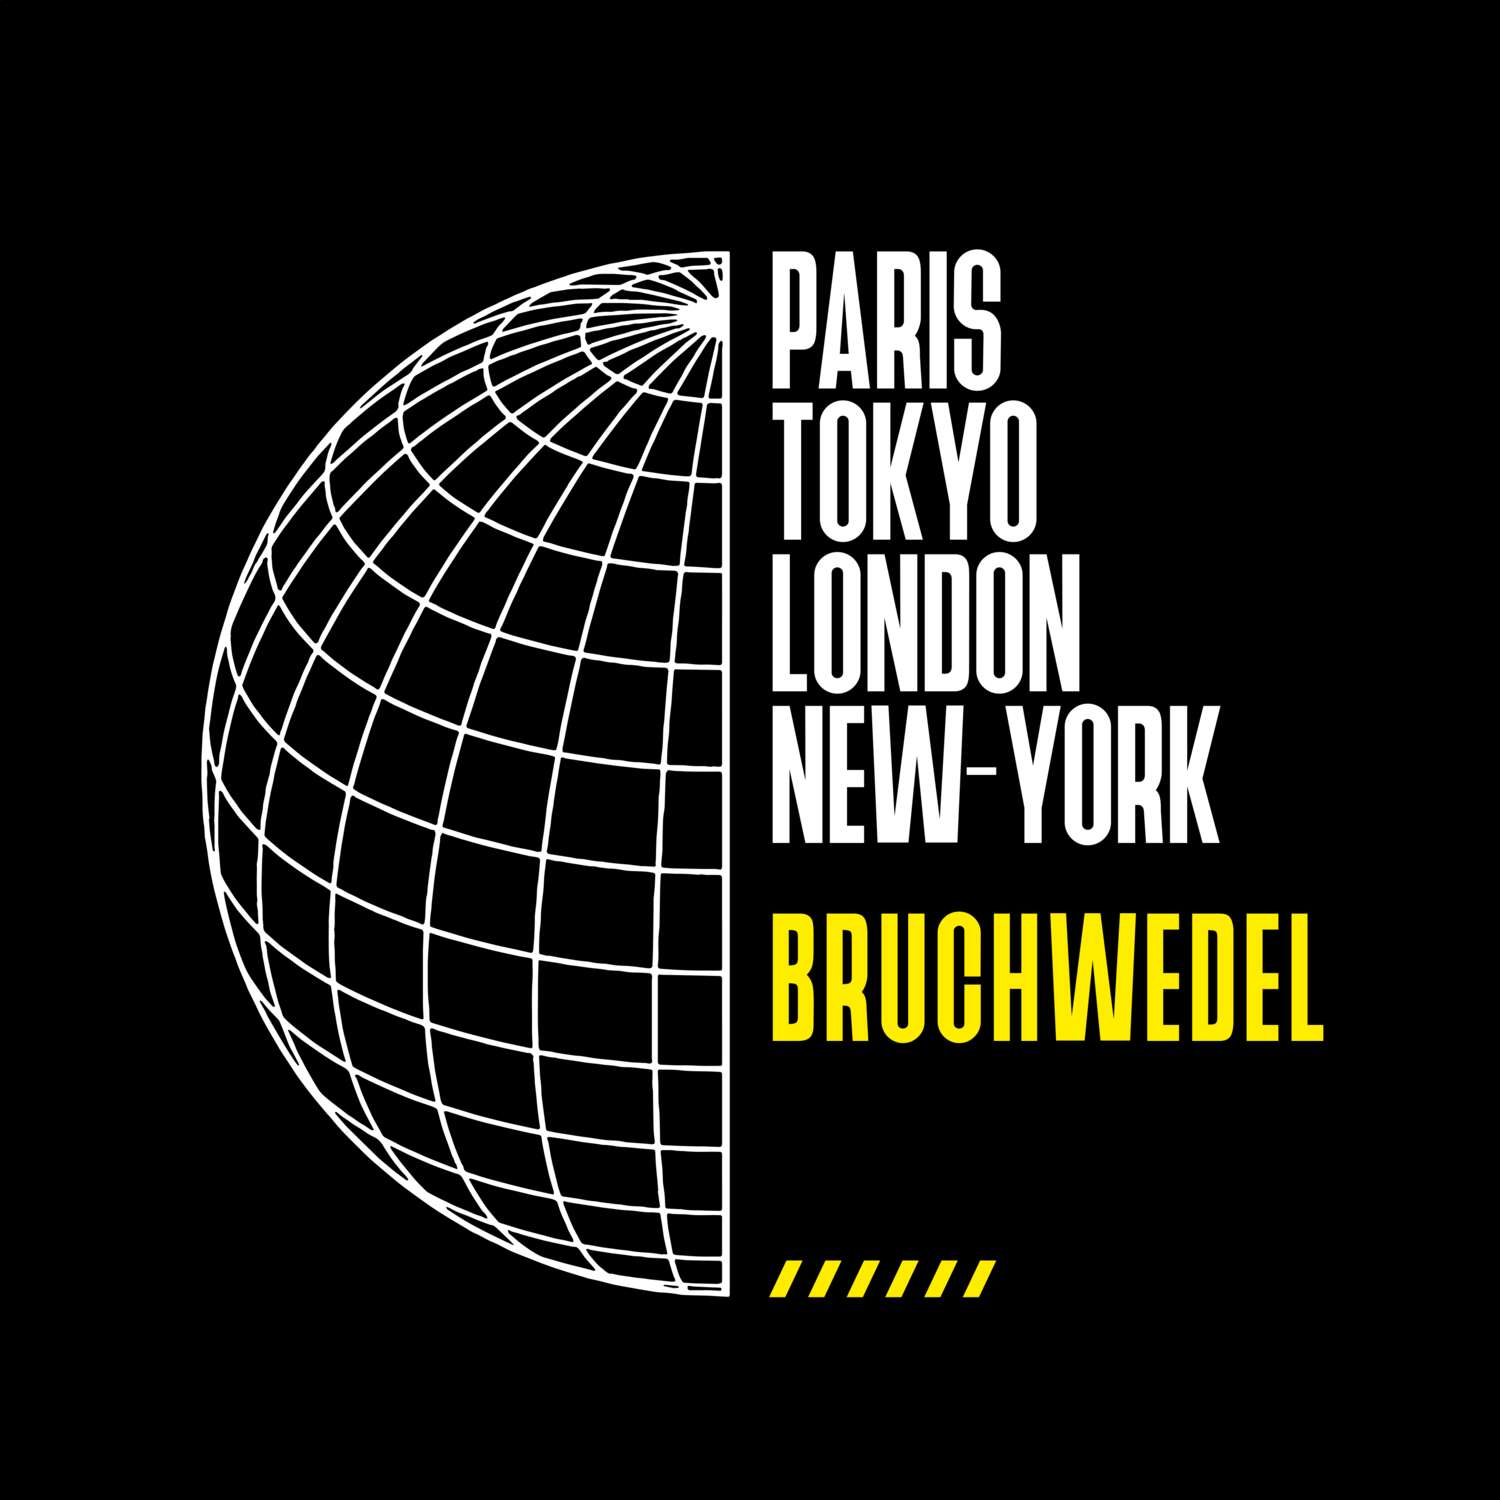 Bruchwedel T-Shirt »Paris Tokyo London«